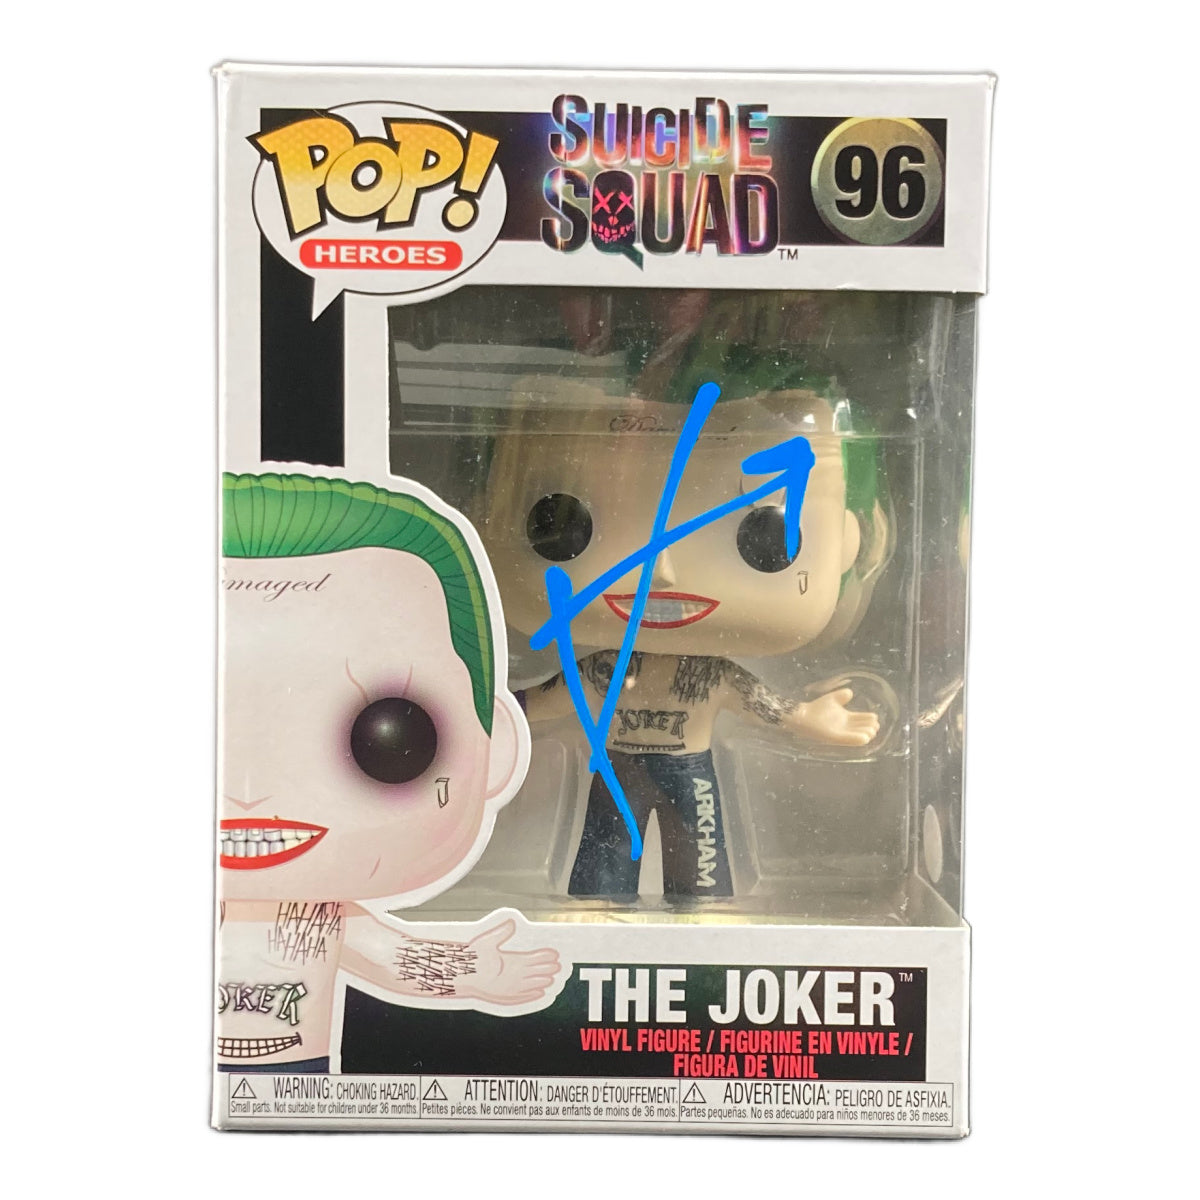 Jared Leto Signed Funko POP Suicide Squad 96 The Joker Autographed JSA COA